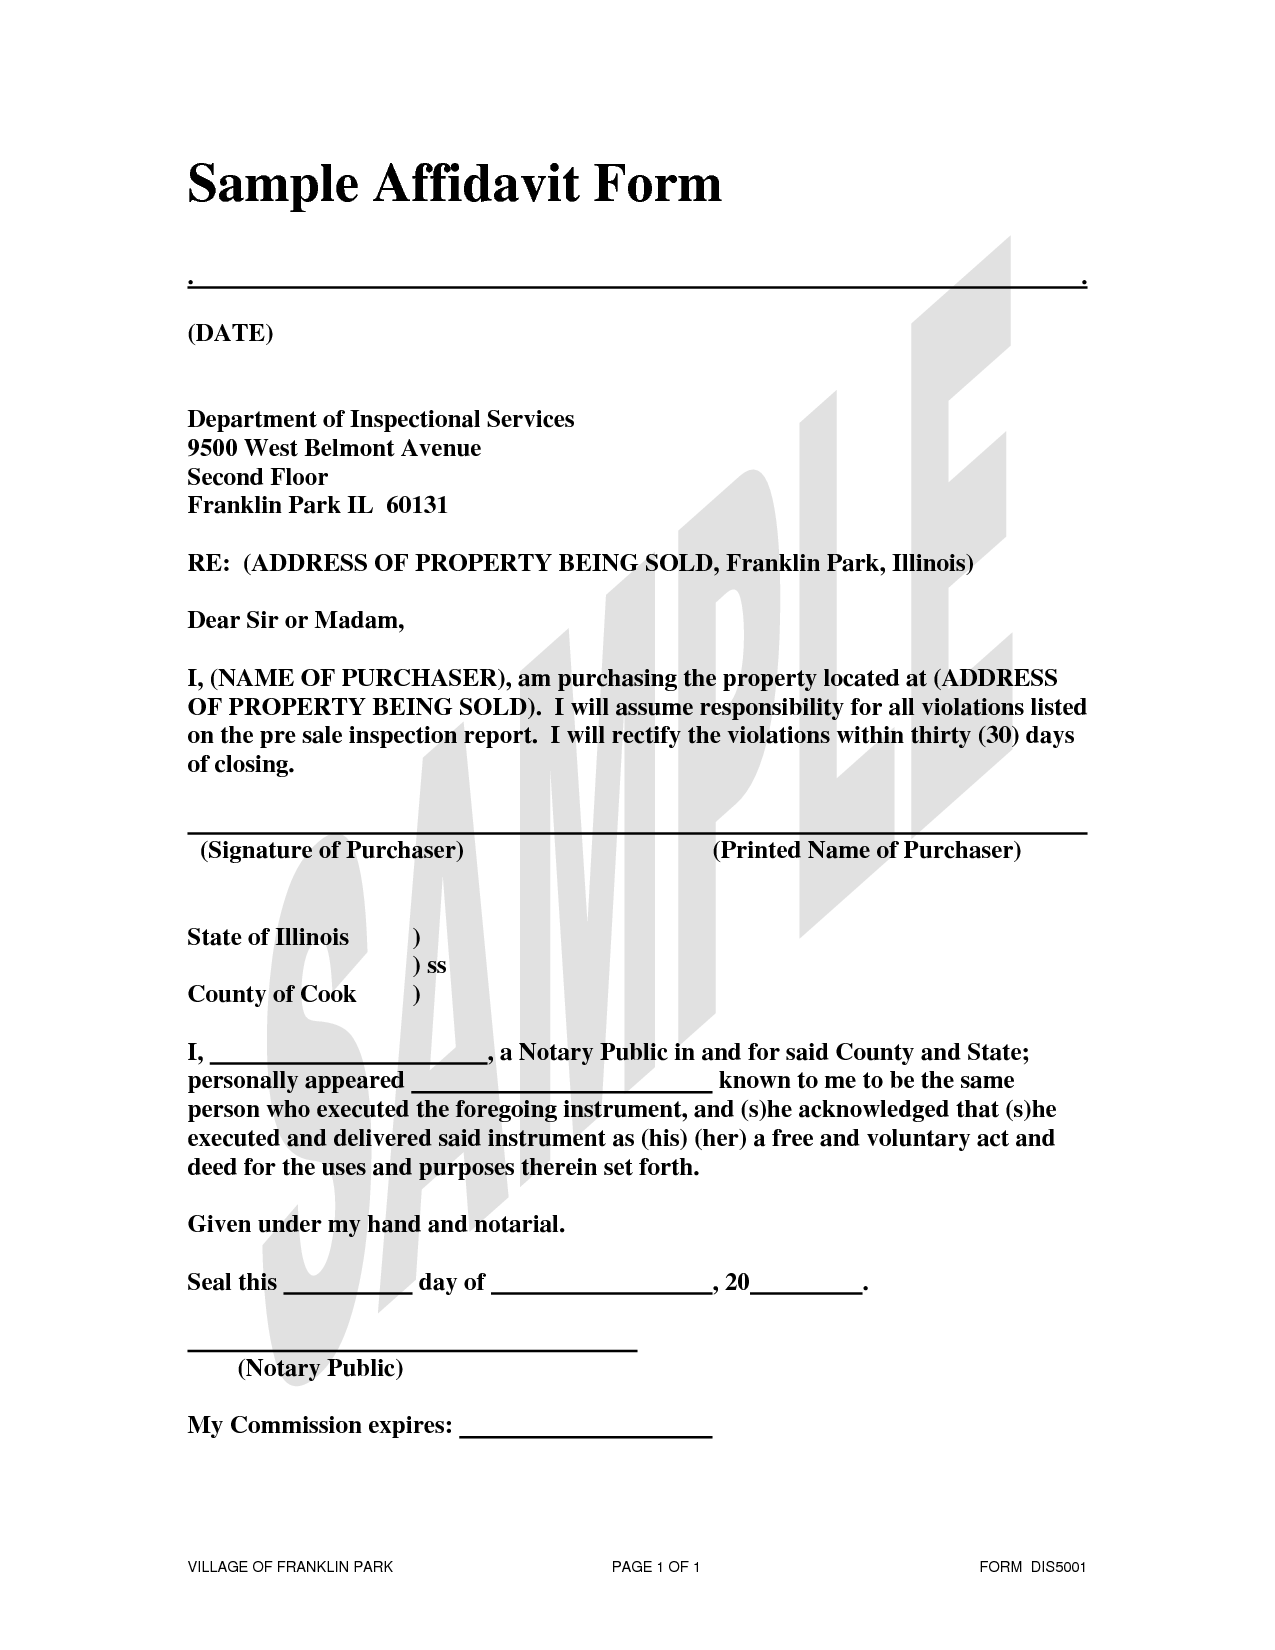 affidavit-form-sample-free-printable-documents